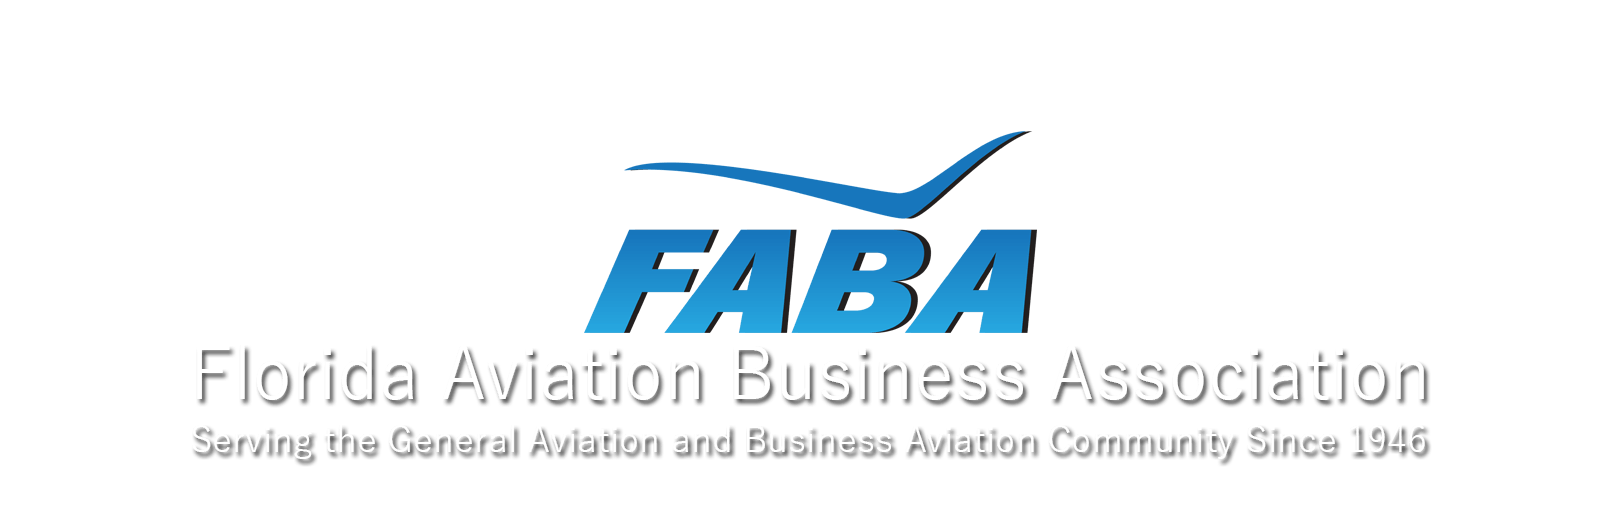 General Aviation Logo - Florida Aviation Business Association | FABA - Florida Aviation ...